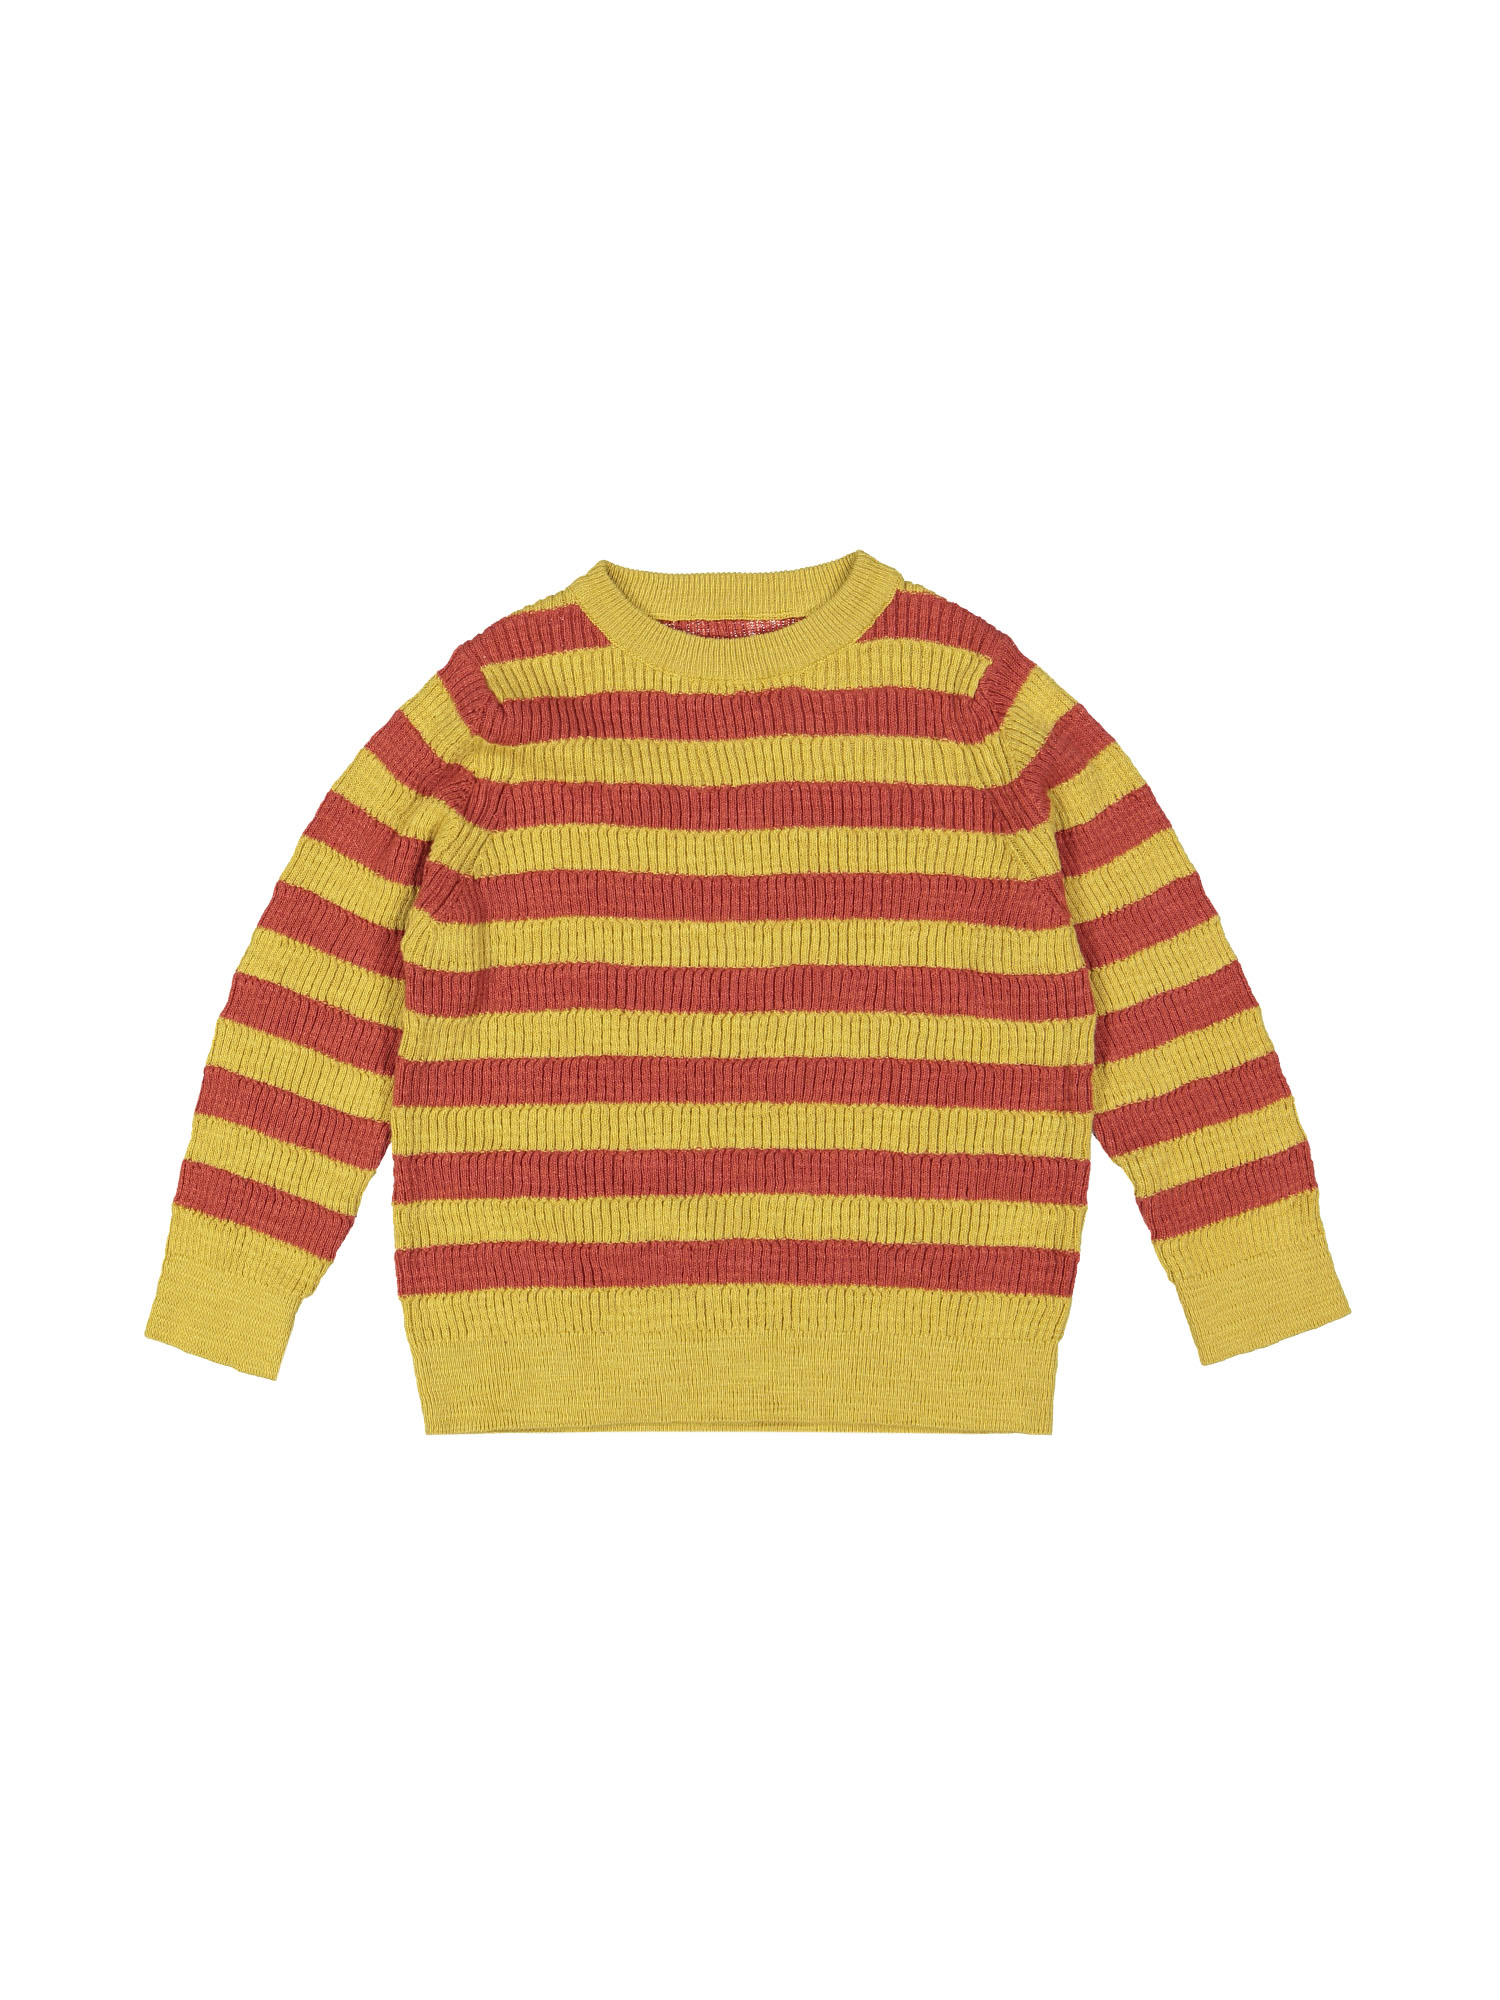 pull tricot stripes geel roodbruin 02j